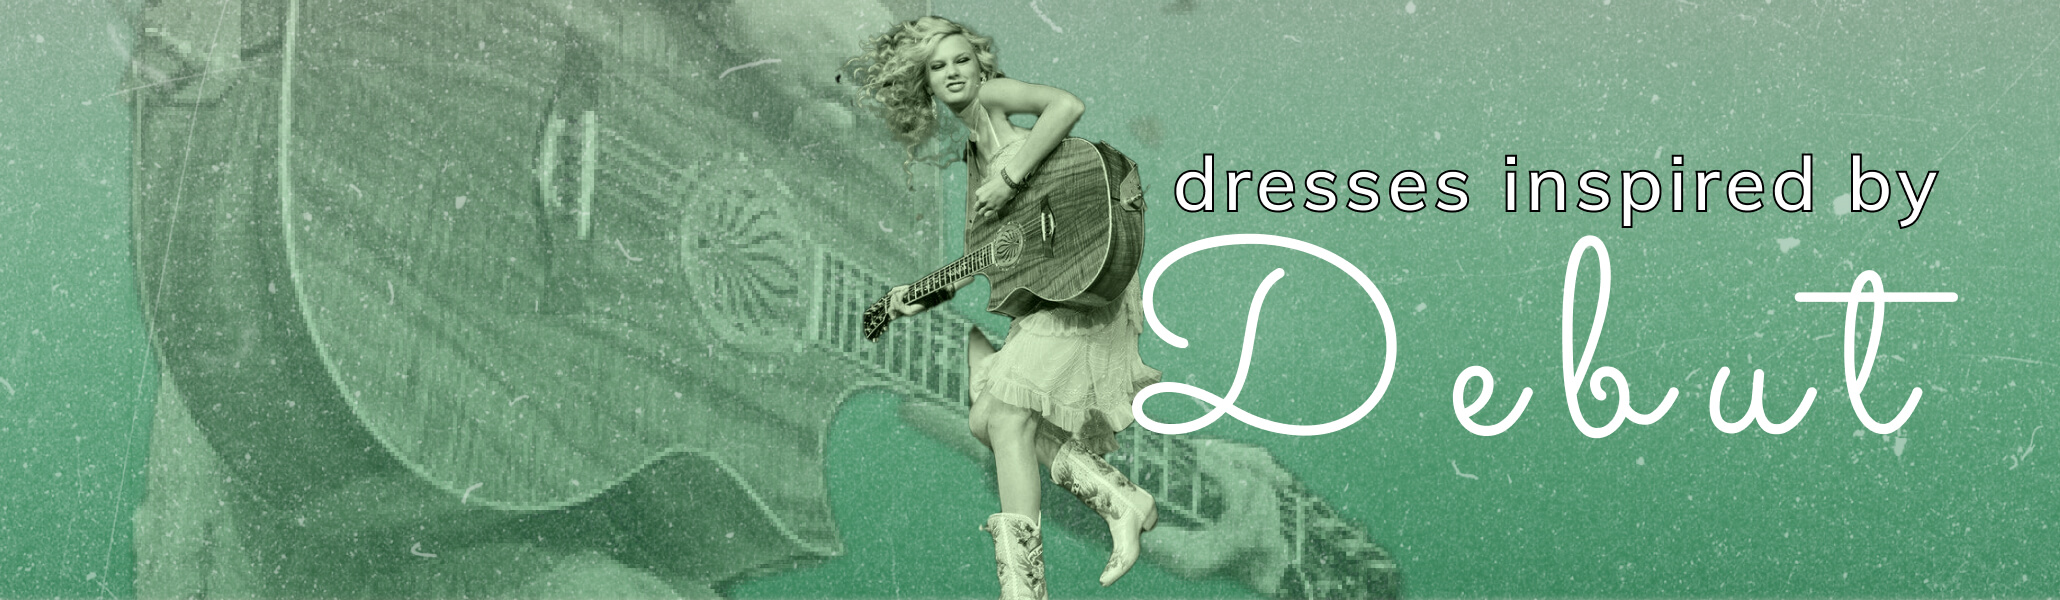 Shop Taylor swift debut album inspired dresses